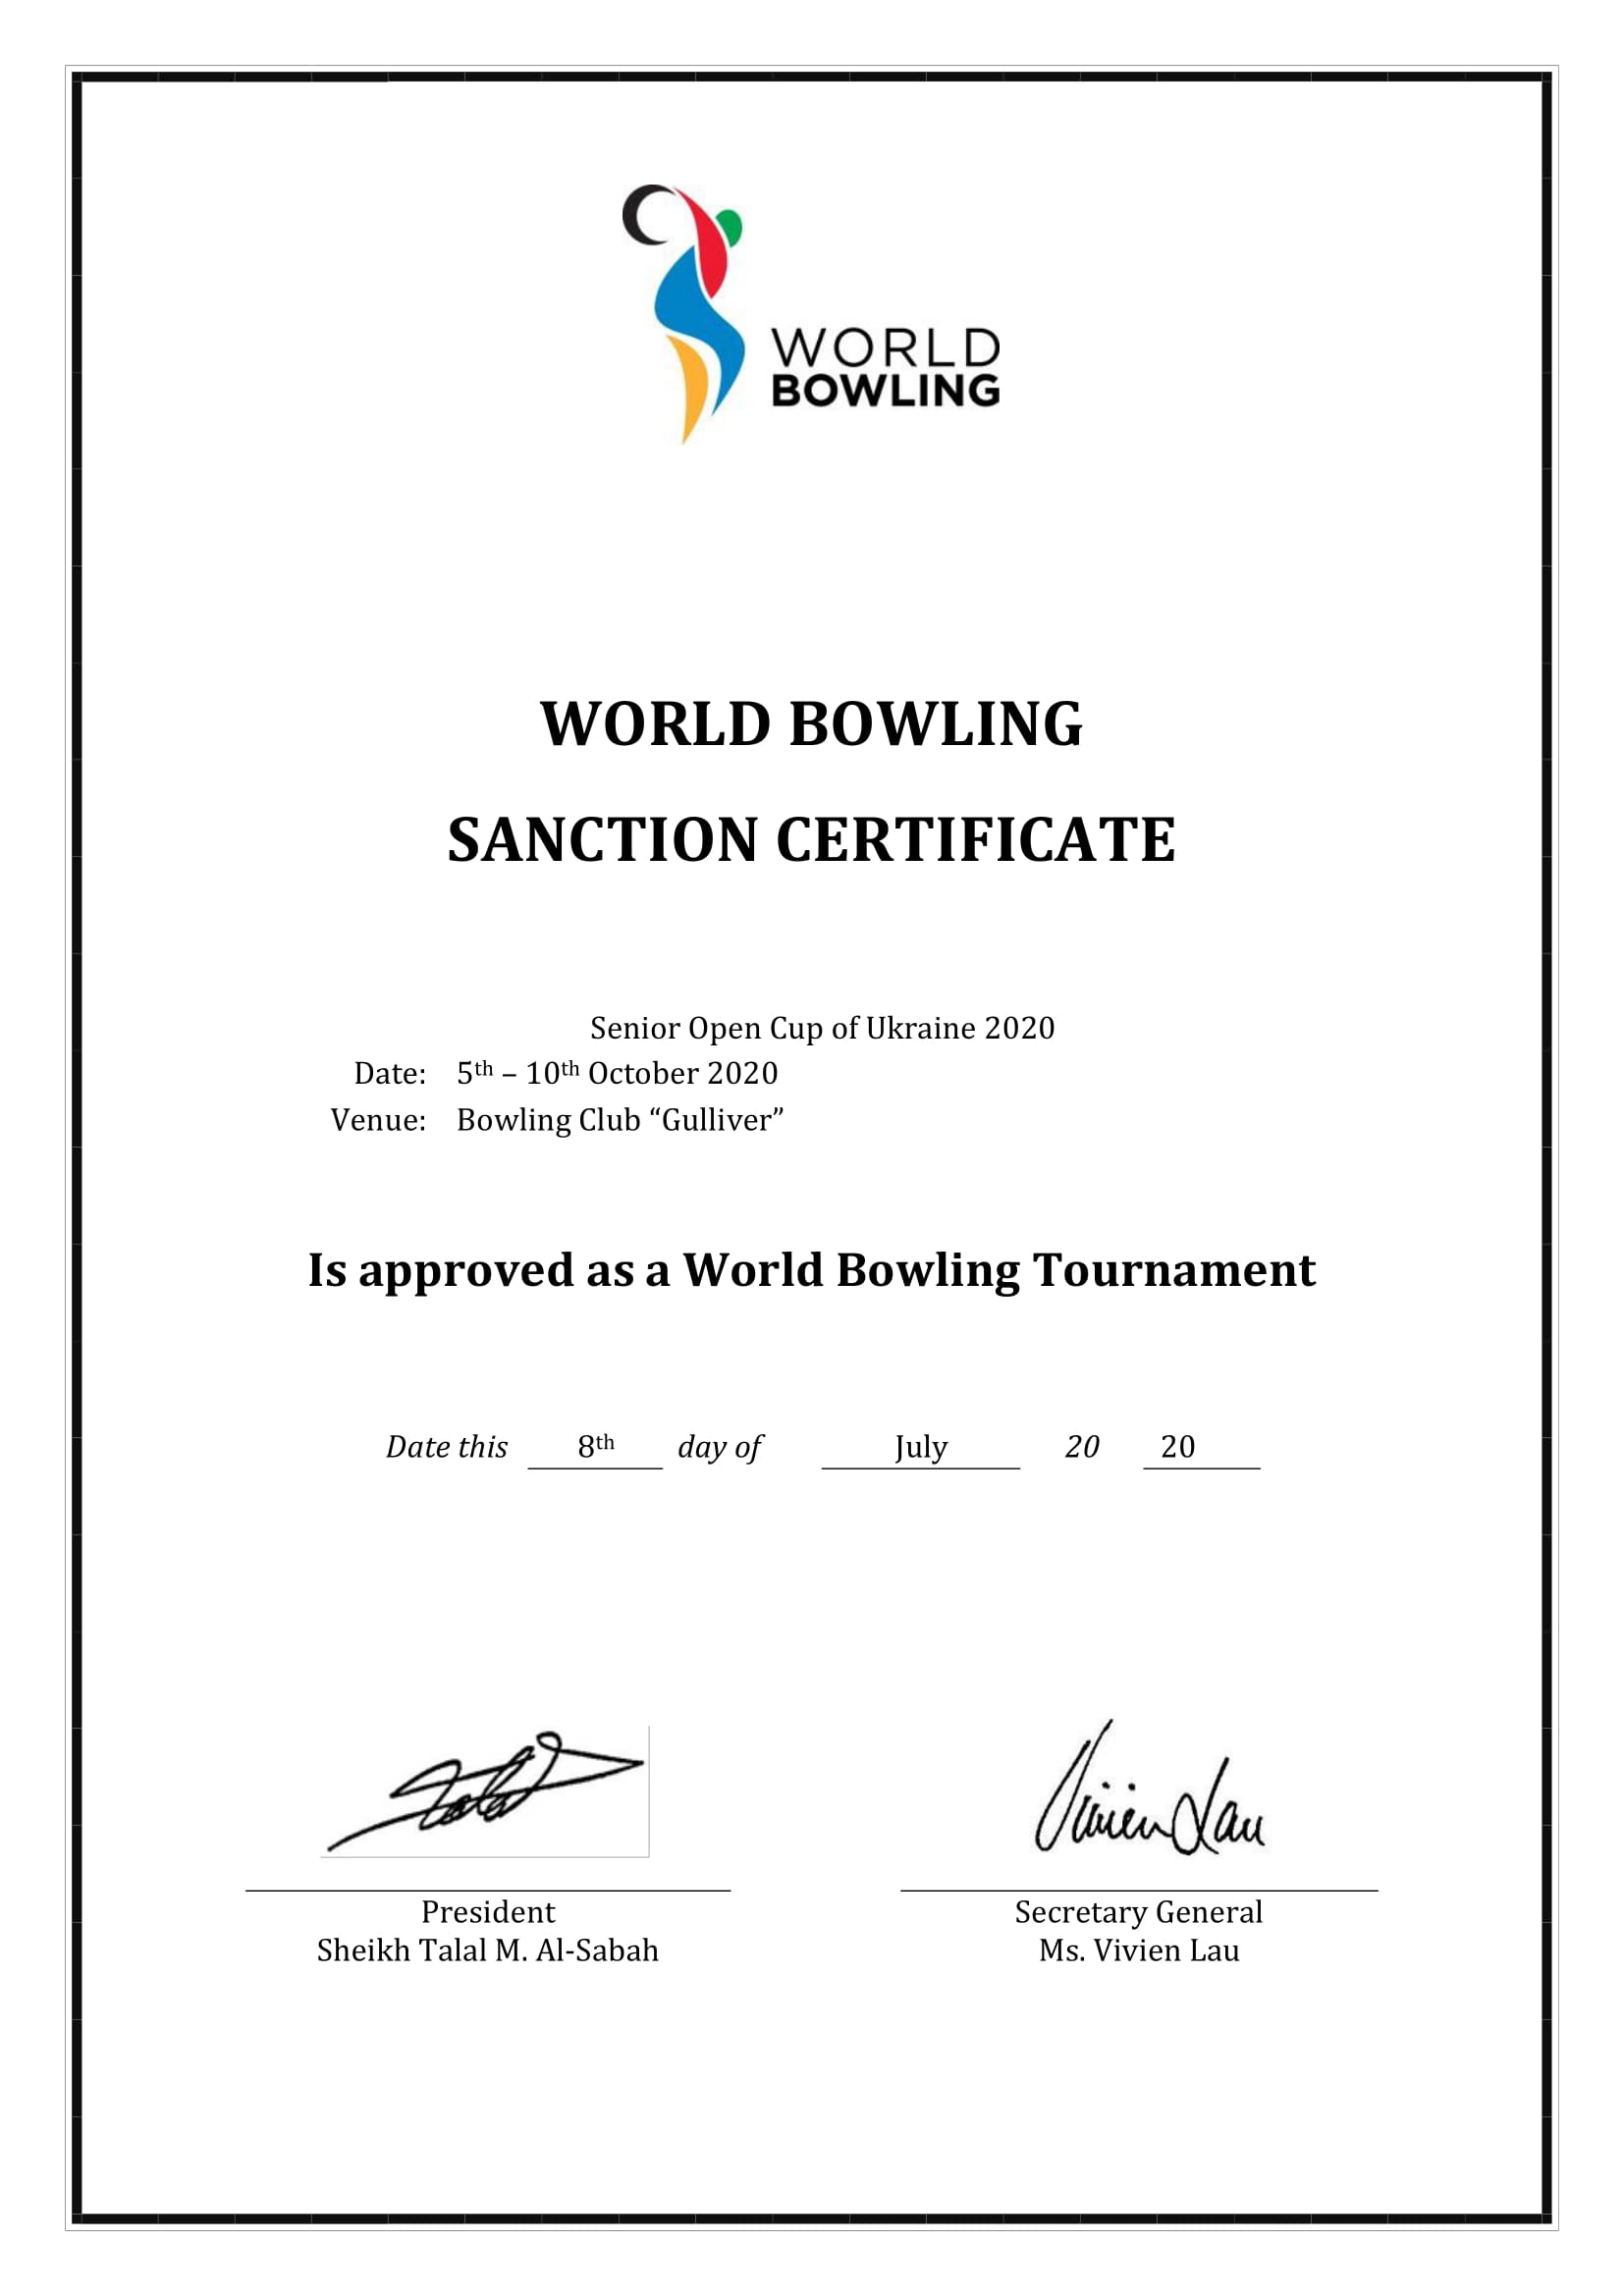 WORLD BOWLING SANCTION Certificate